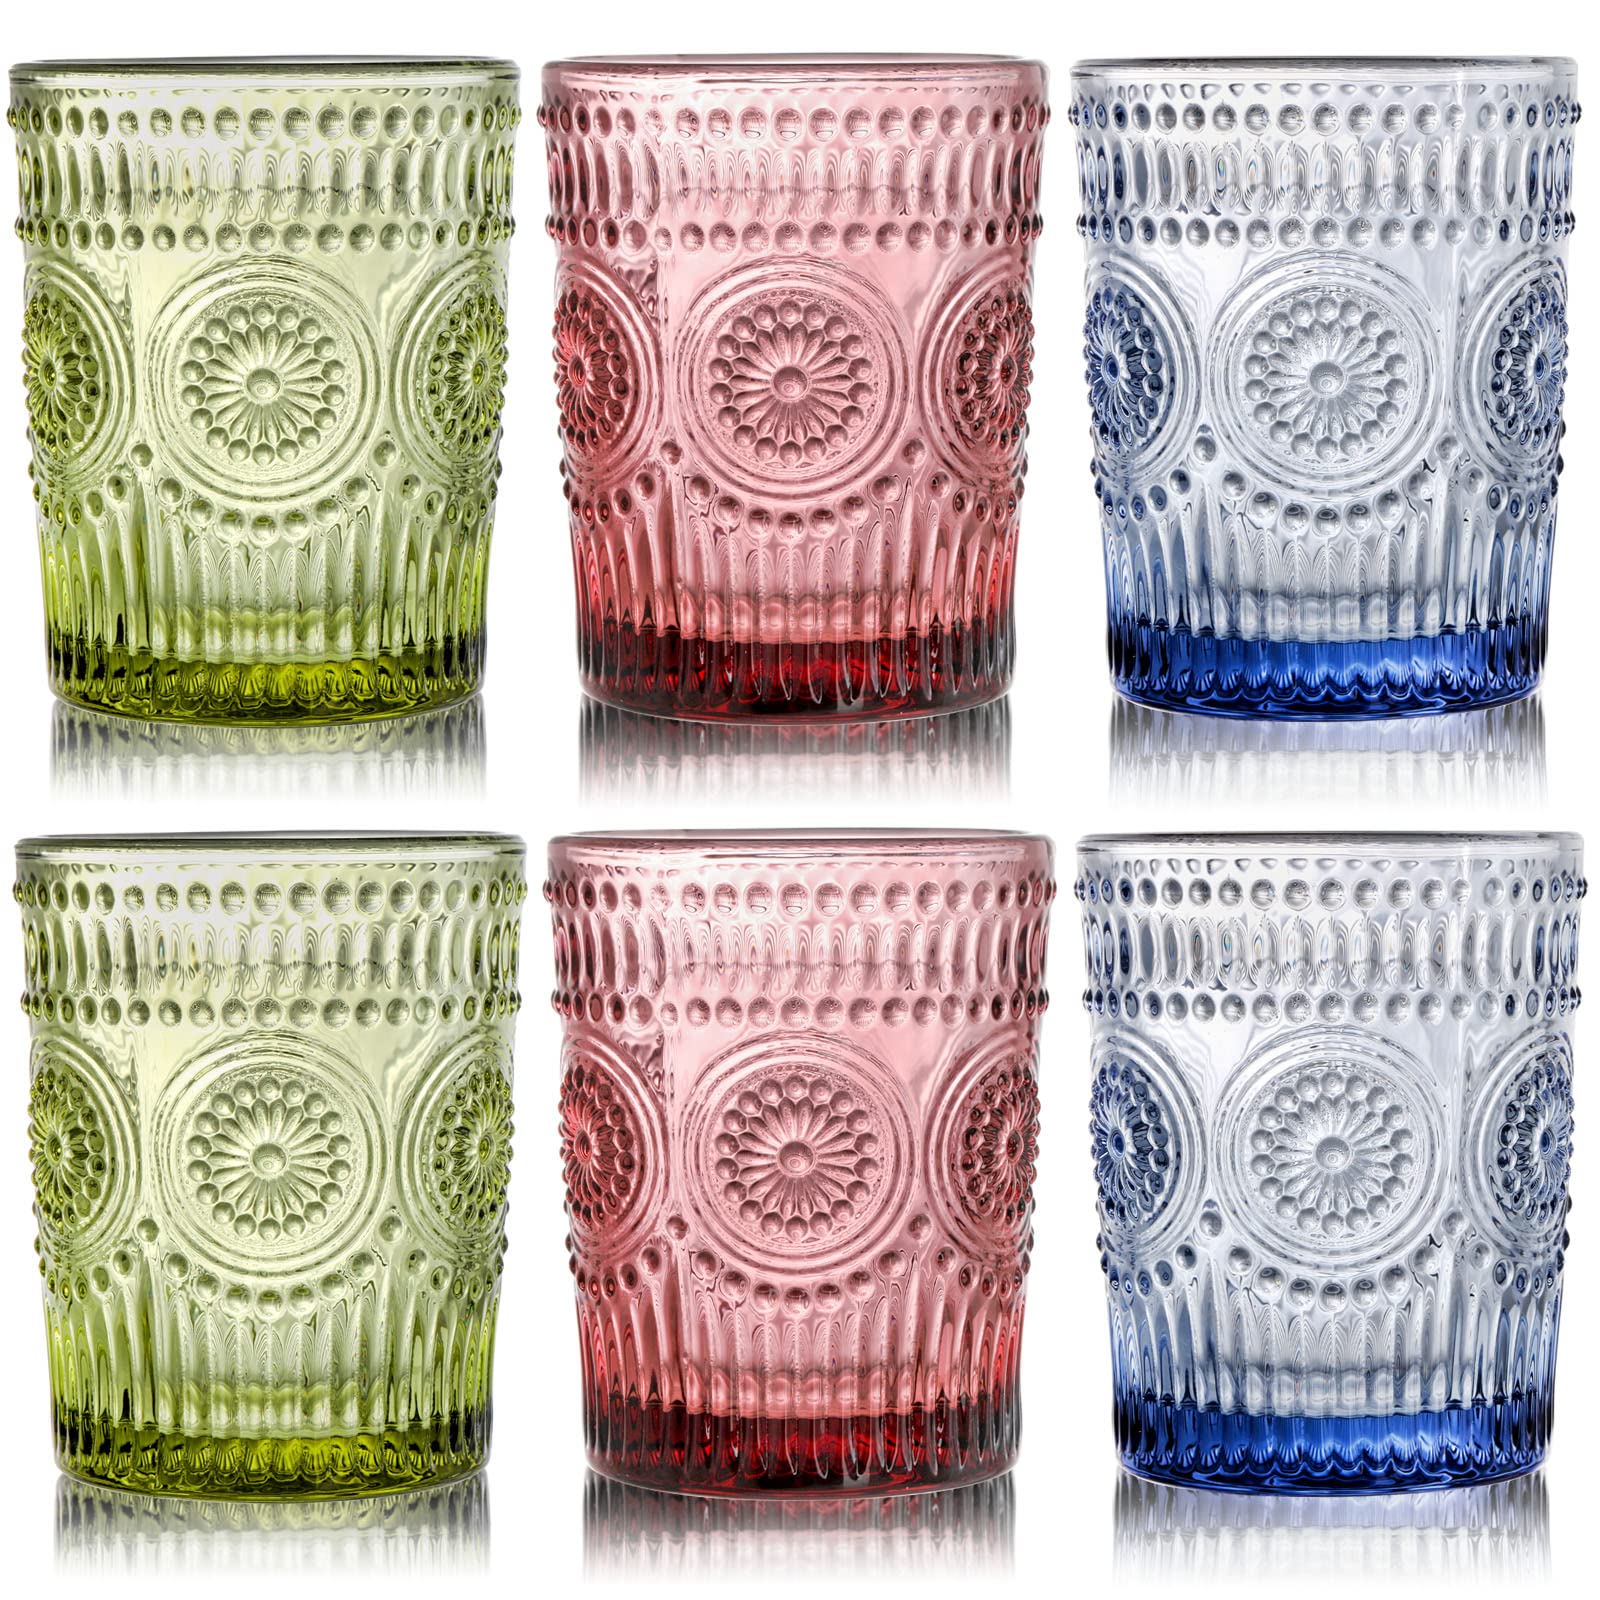 Kingrol 6 Pack 9.5 oz Colored Water Glasses, Vintage Drinking Glasses Tumblers, Premium Glassware Set for Juice, Beverages, Beer, Cocktail